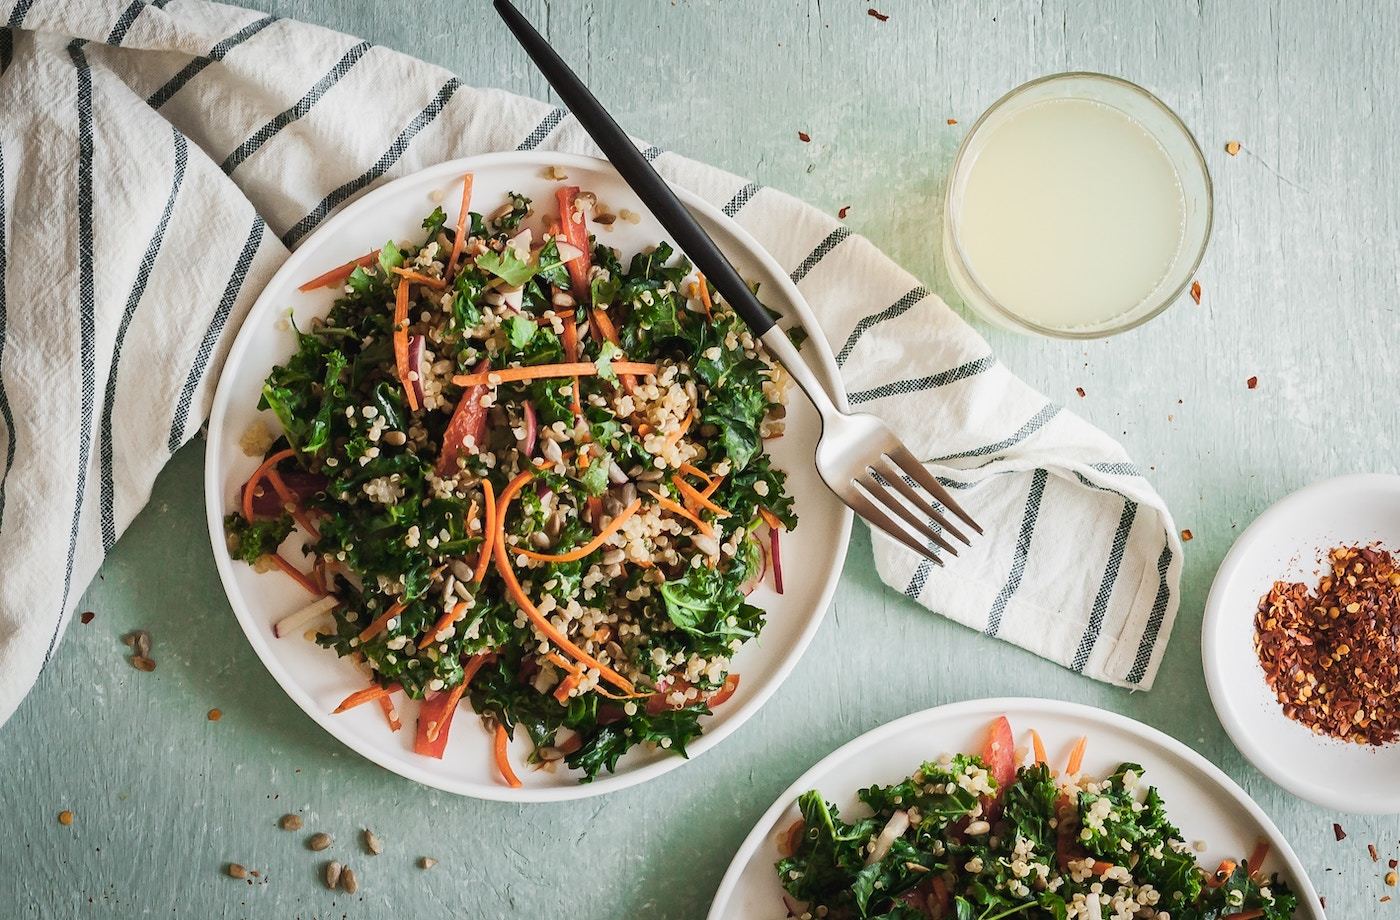 OMAD diet kale salad on white plate